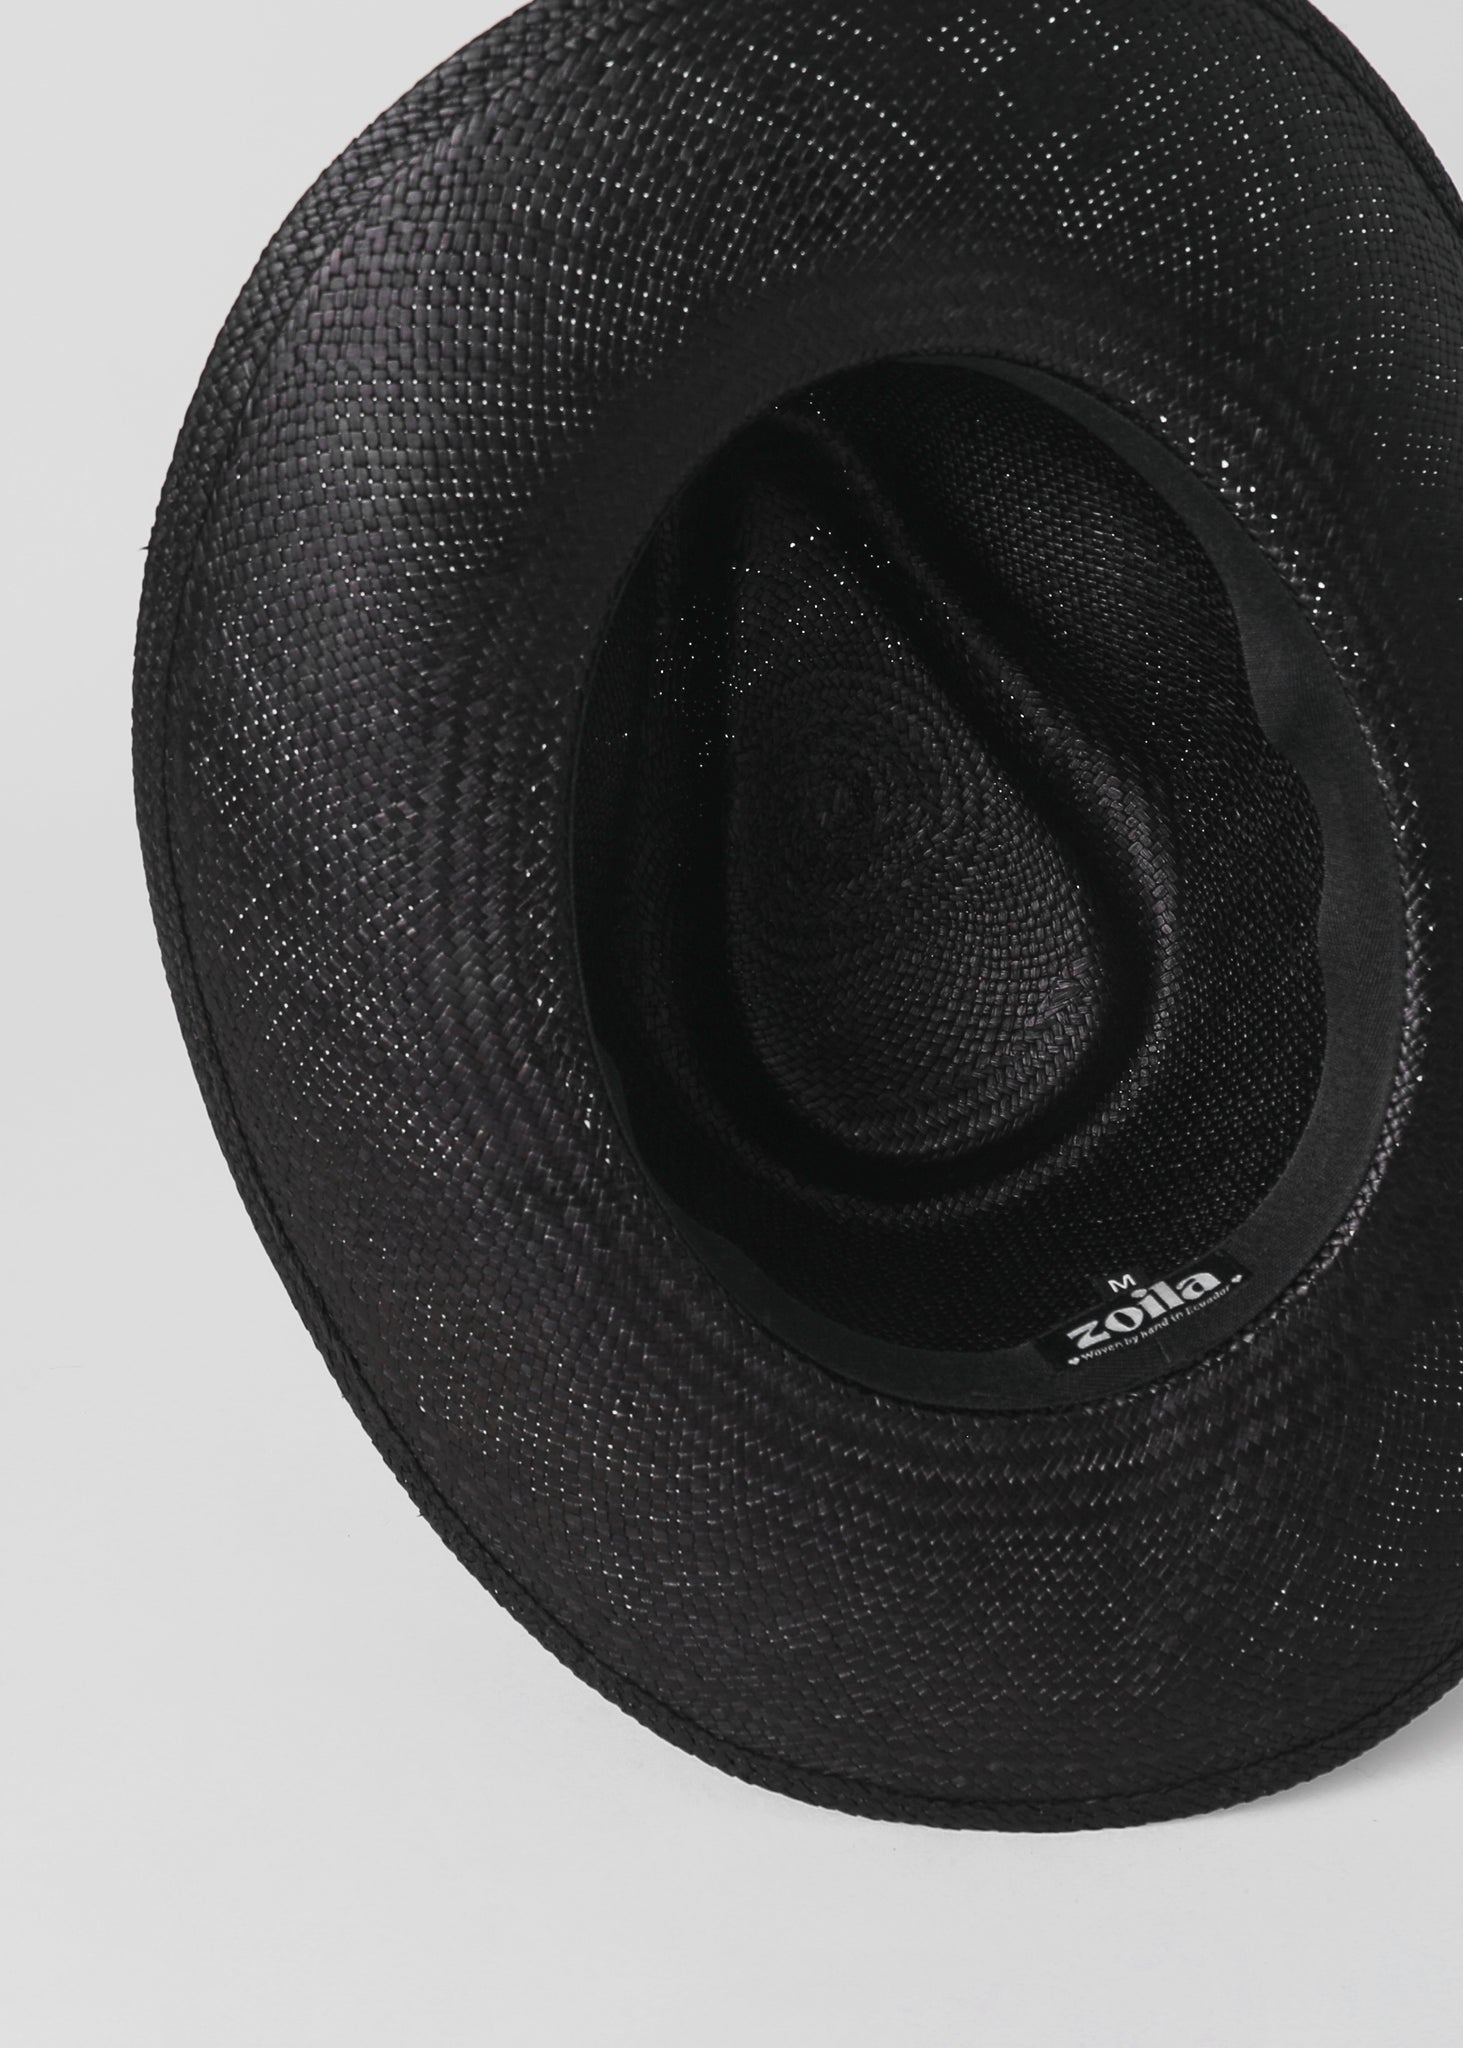 women's black cowboy hat